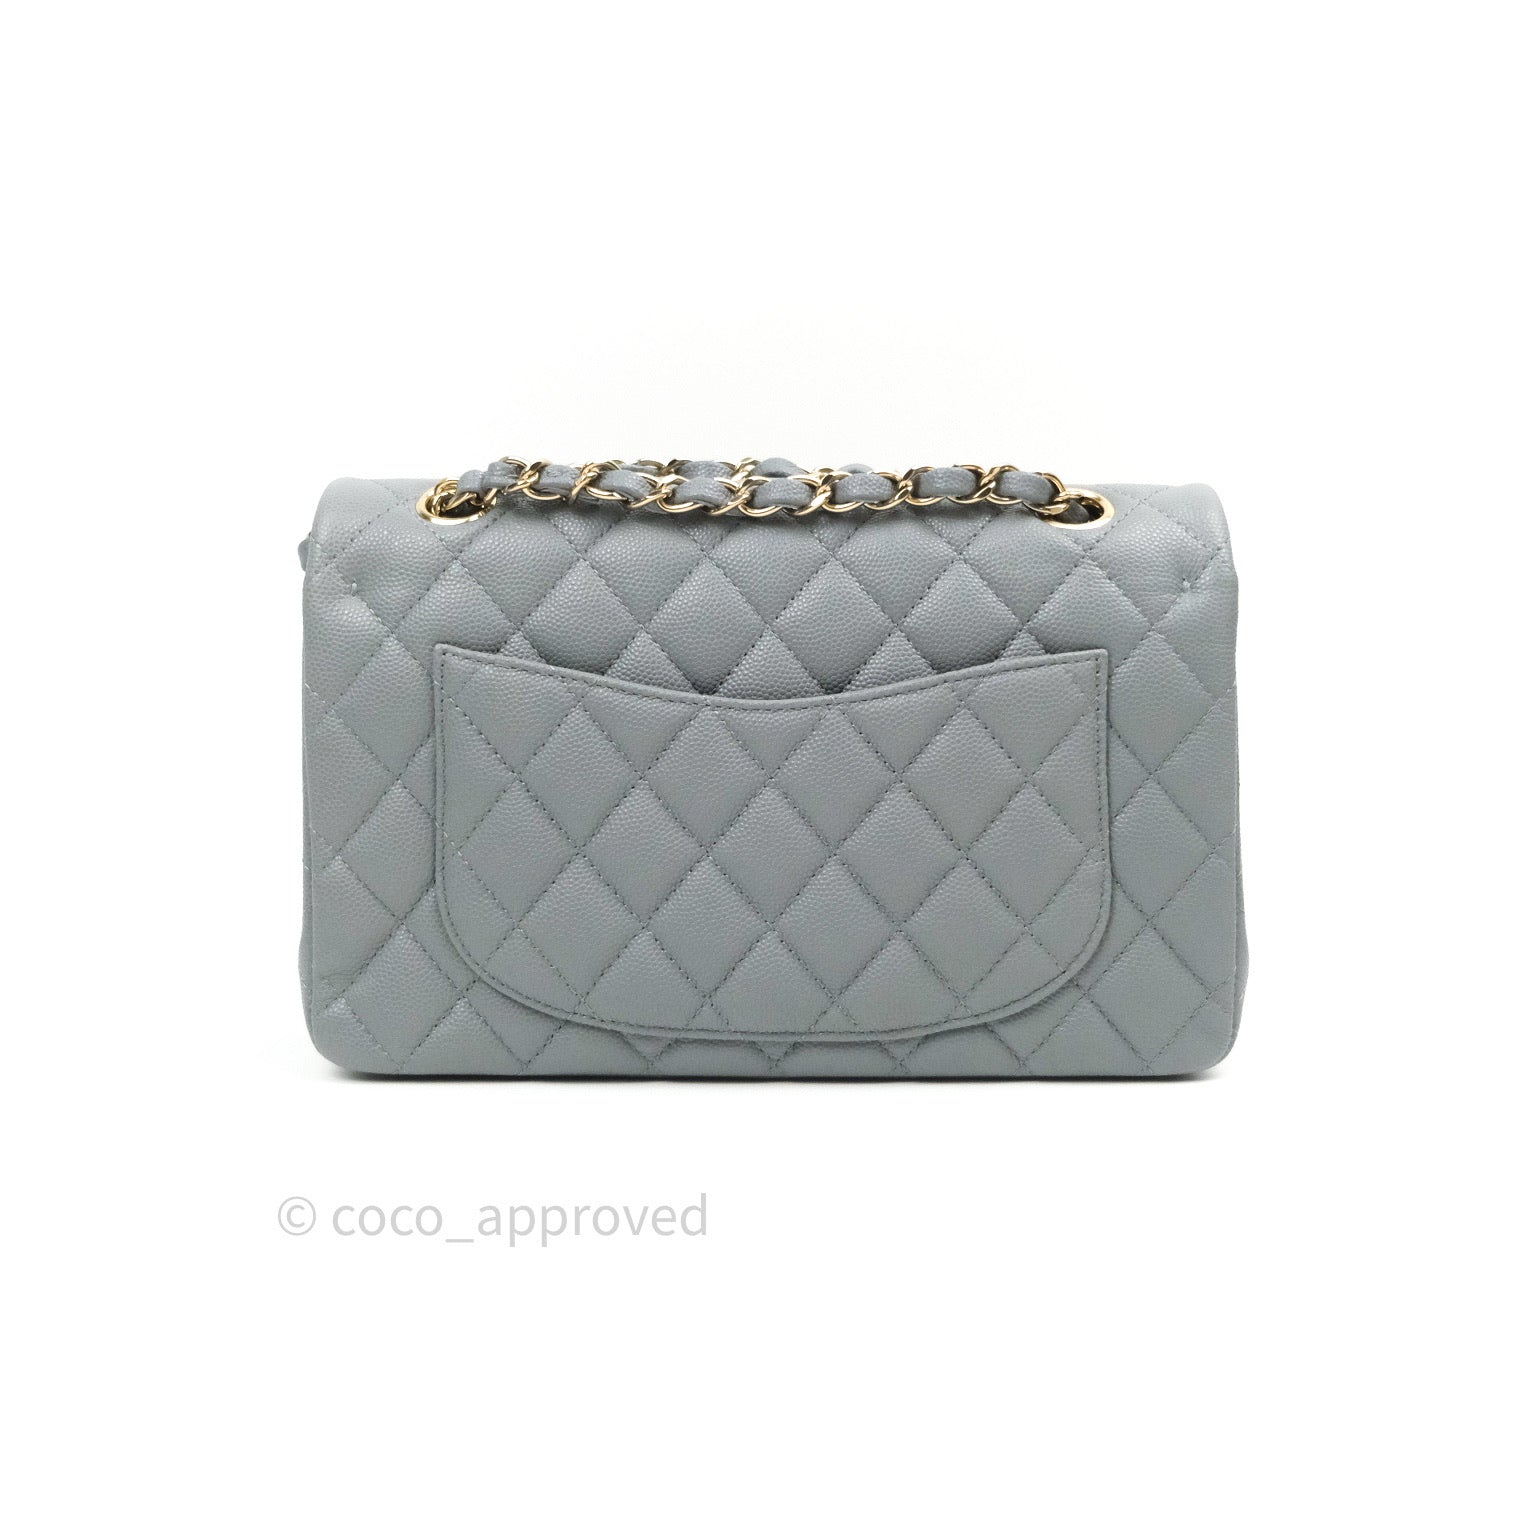 Chanel Classic Flap Bag Mini Metallic Charcoal Gray Chevre